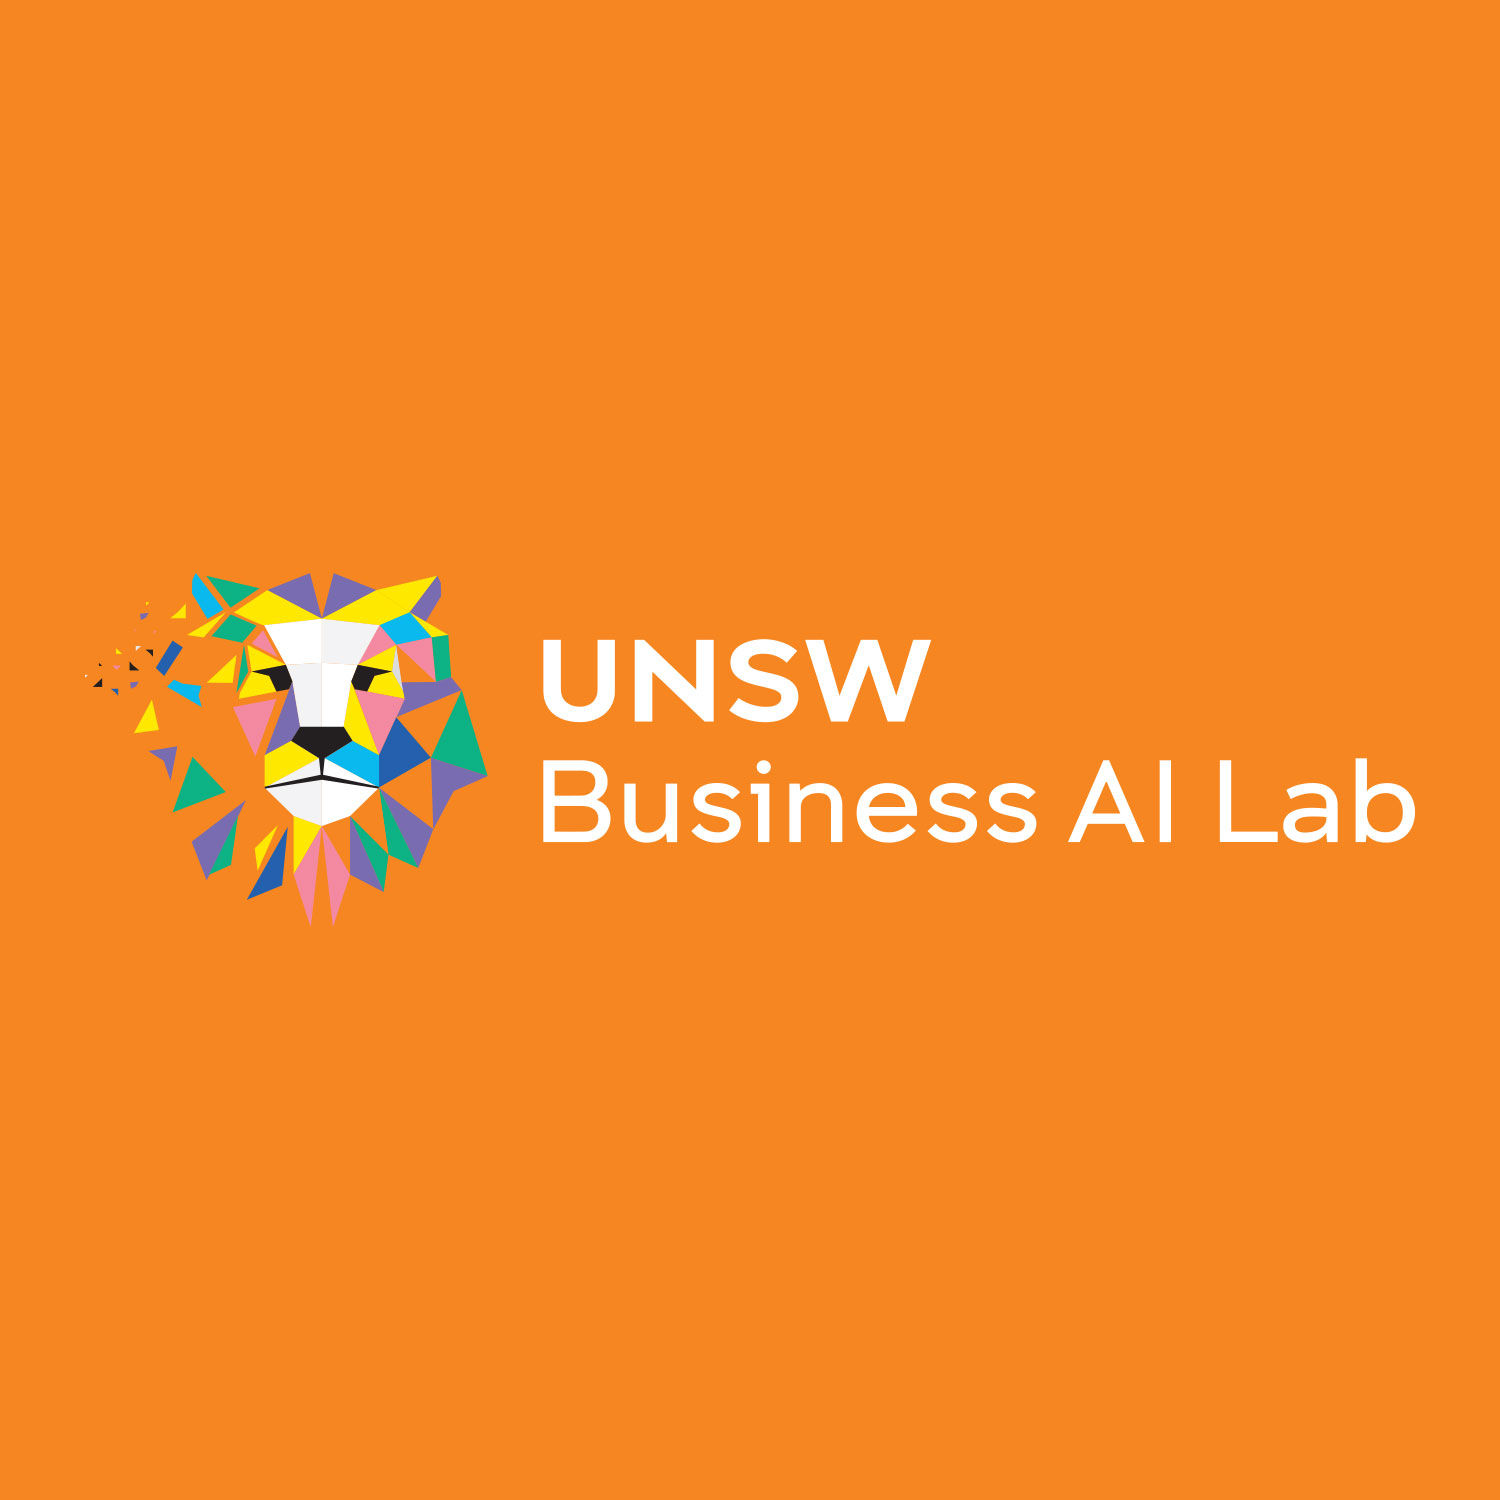 UNSW Business AI Lab